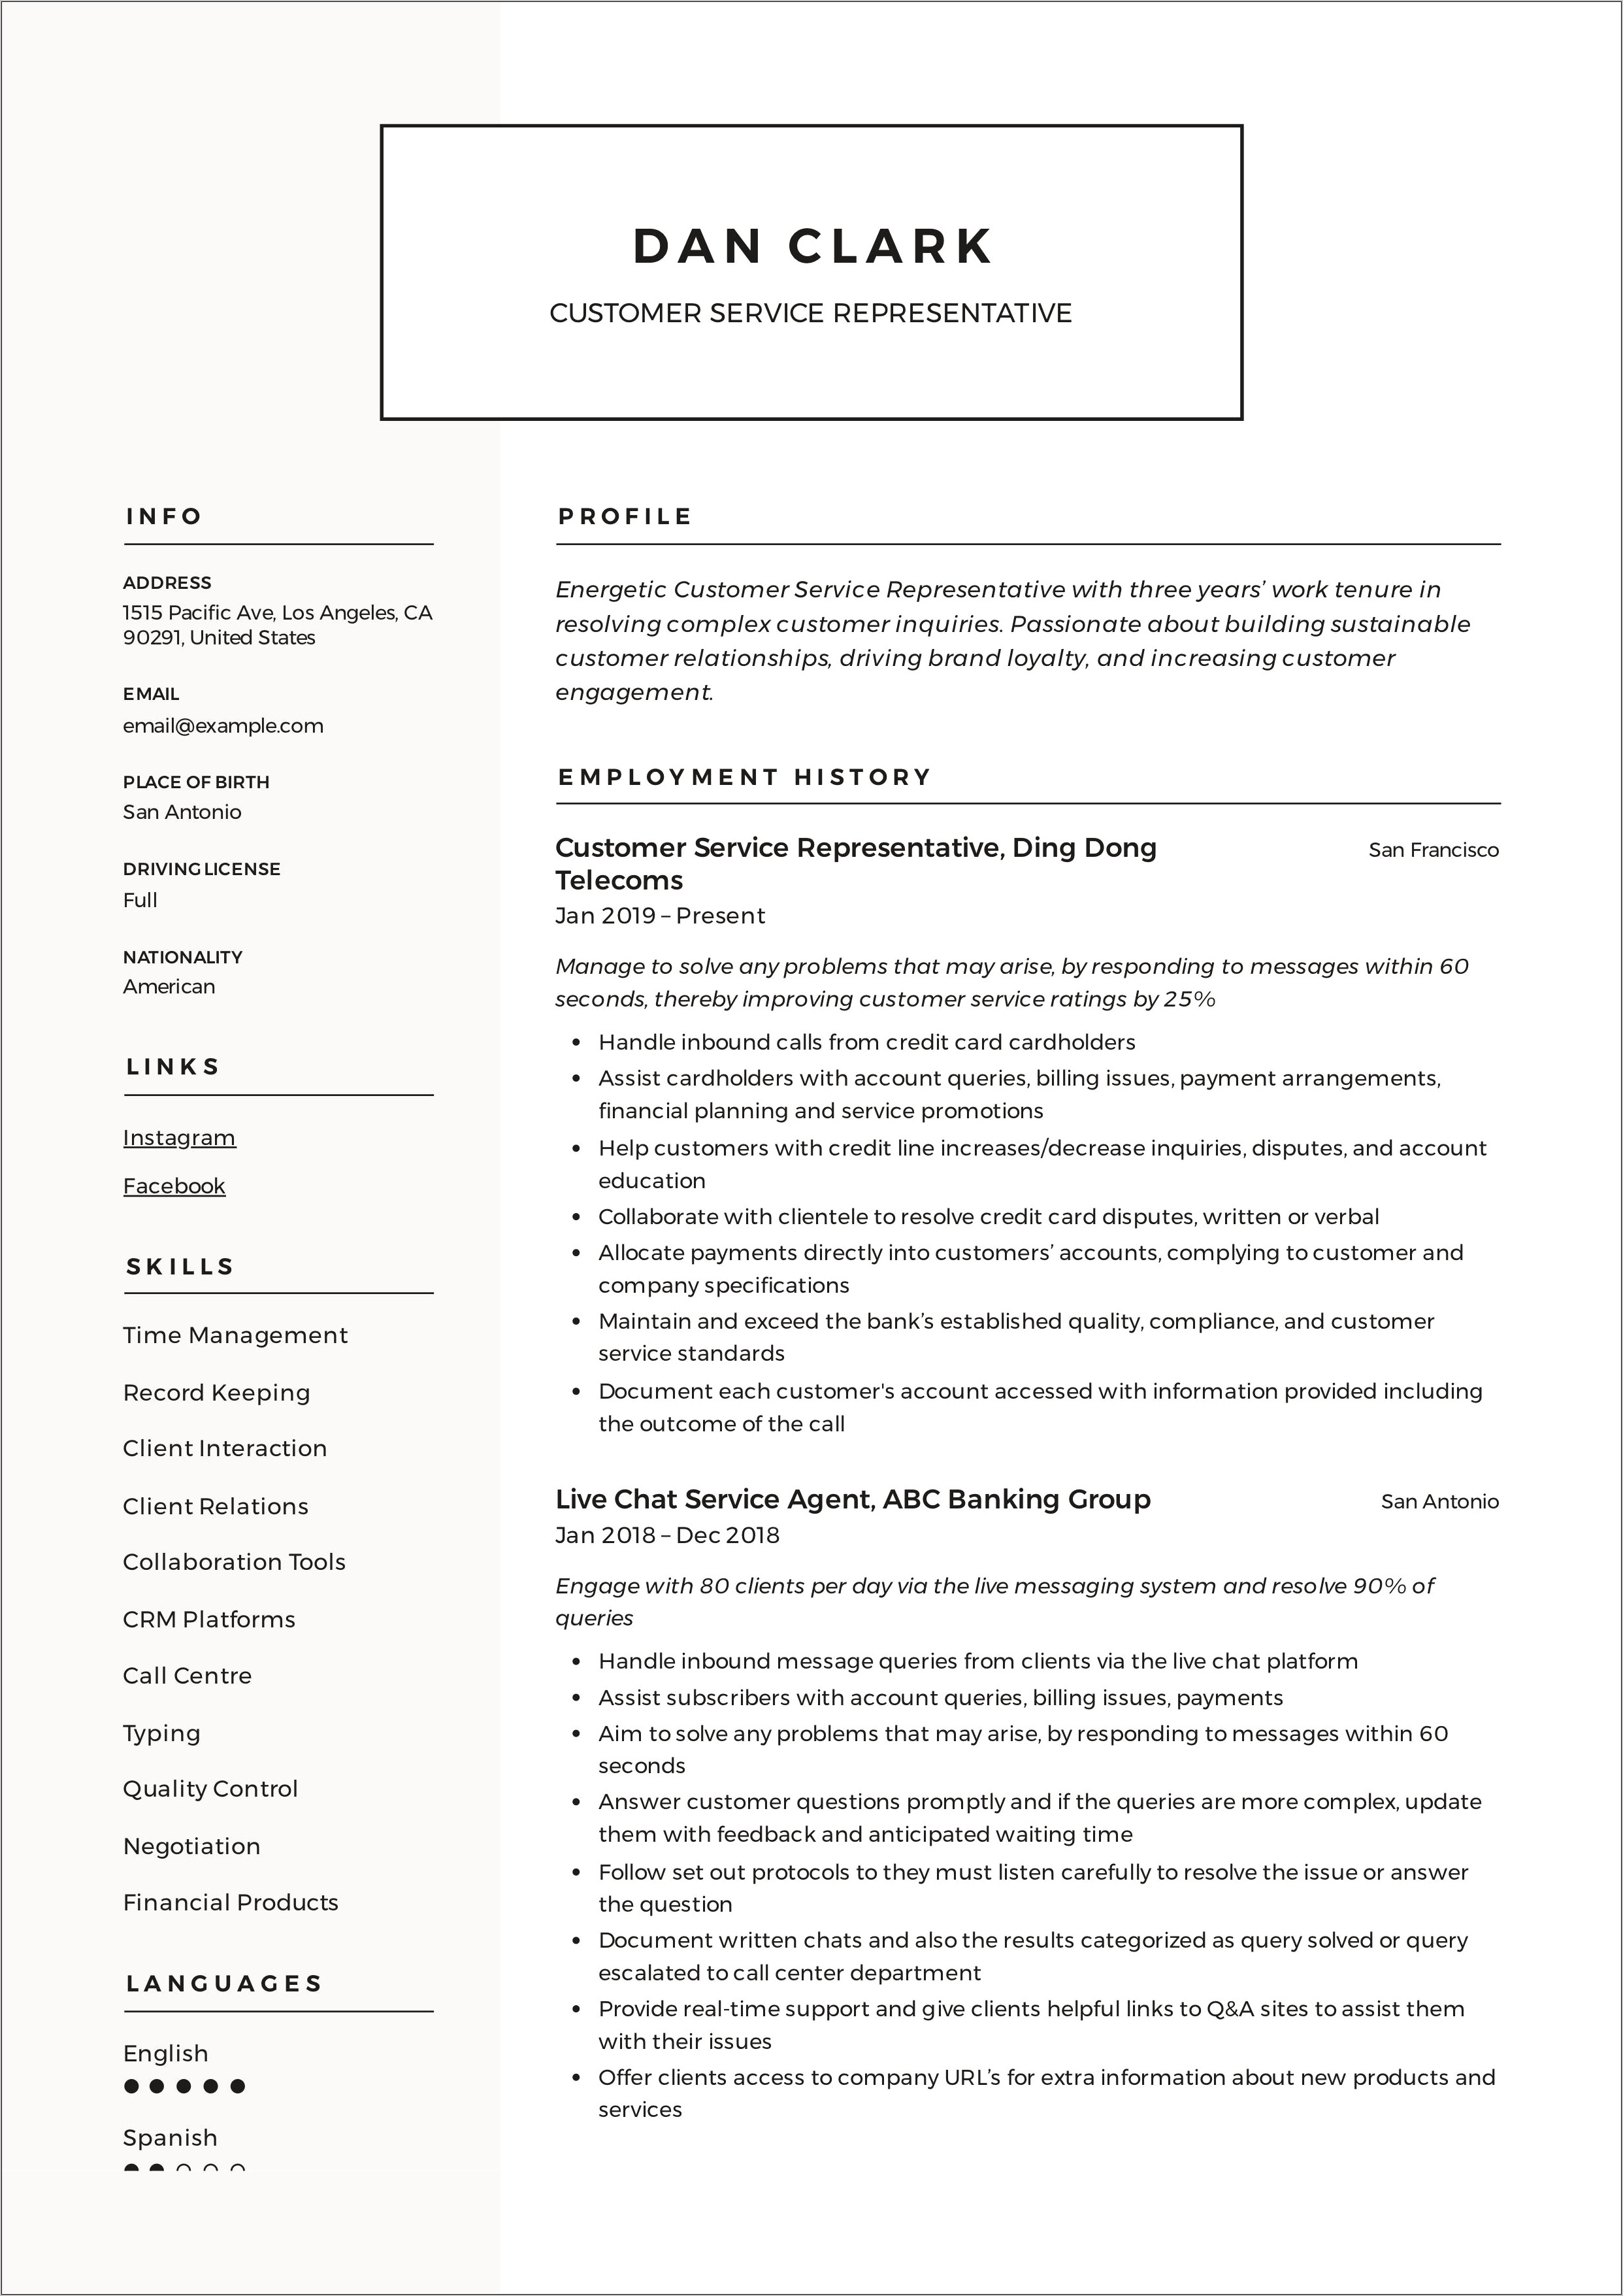 Customer Service Representative Job Responsibilities Resume